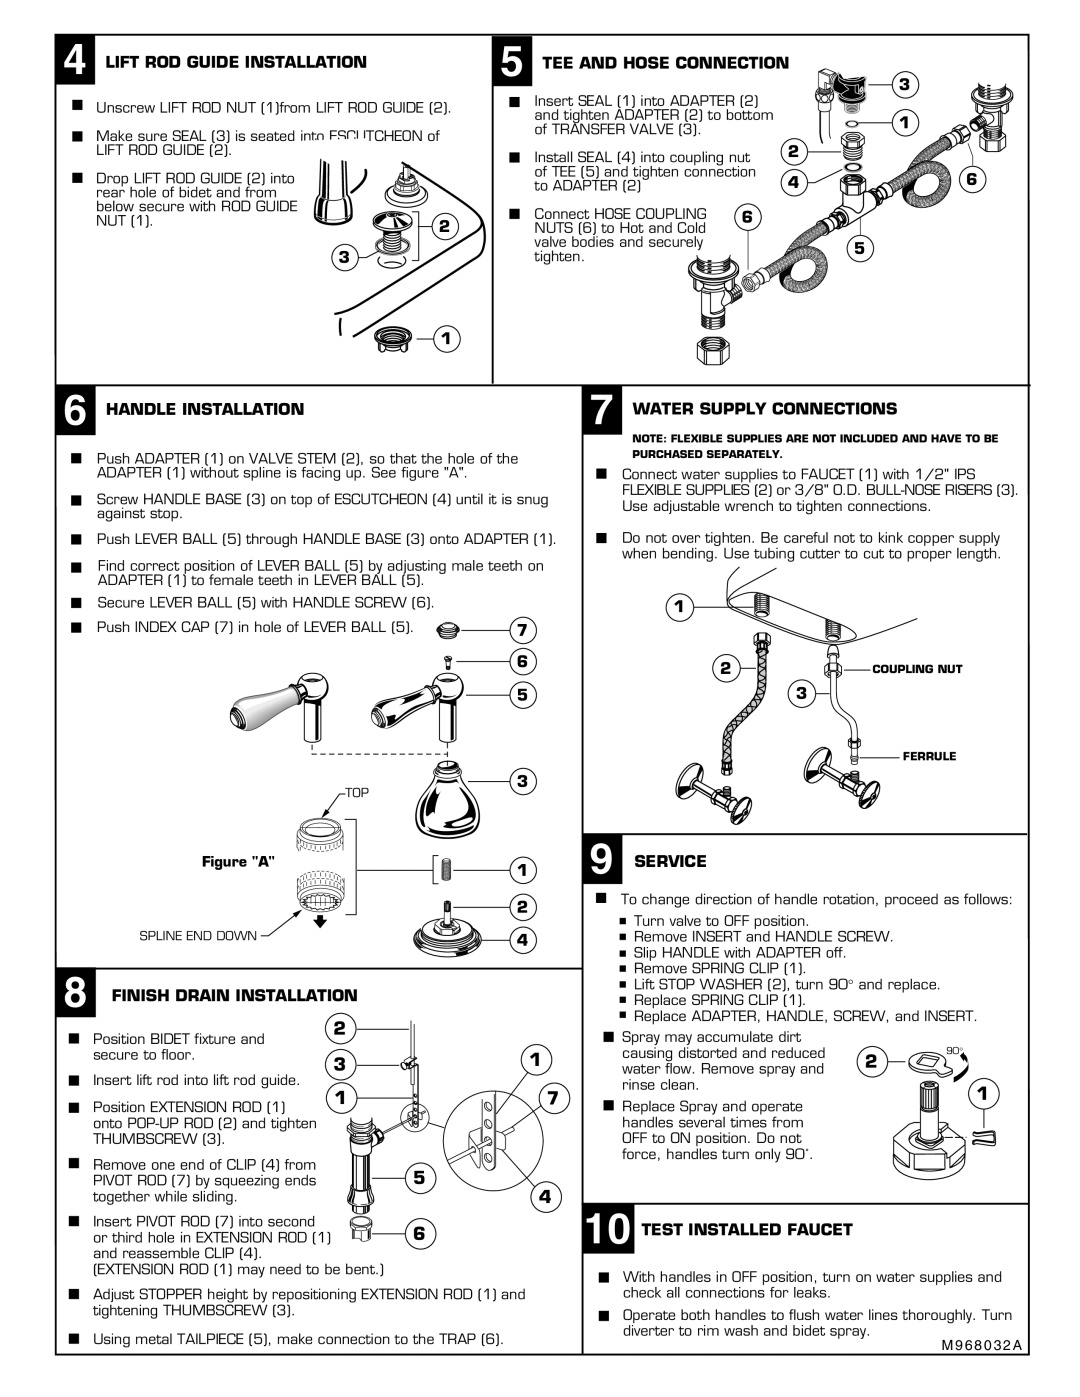 American Standard 7391.229, 7391.224 installation instructions Lift Rod Guide Installation 